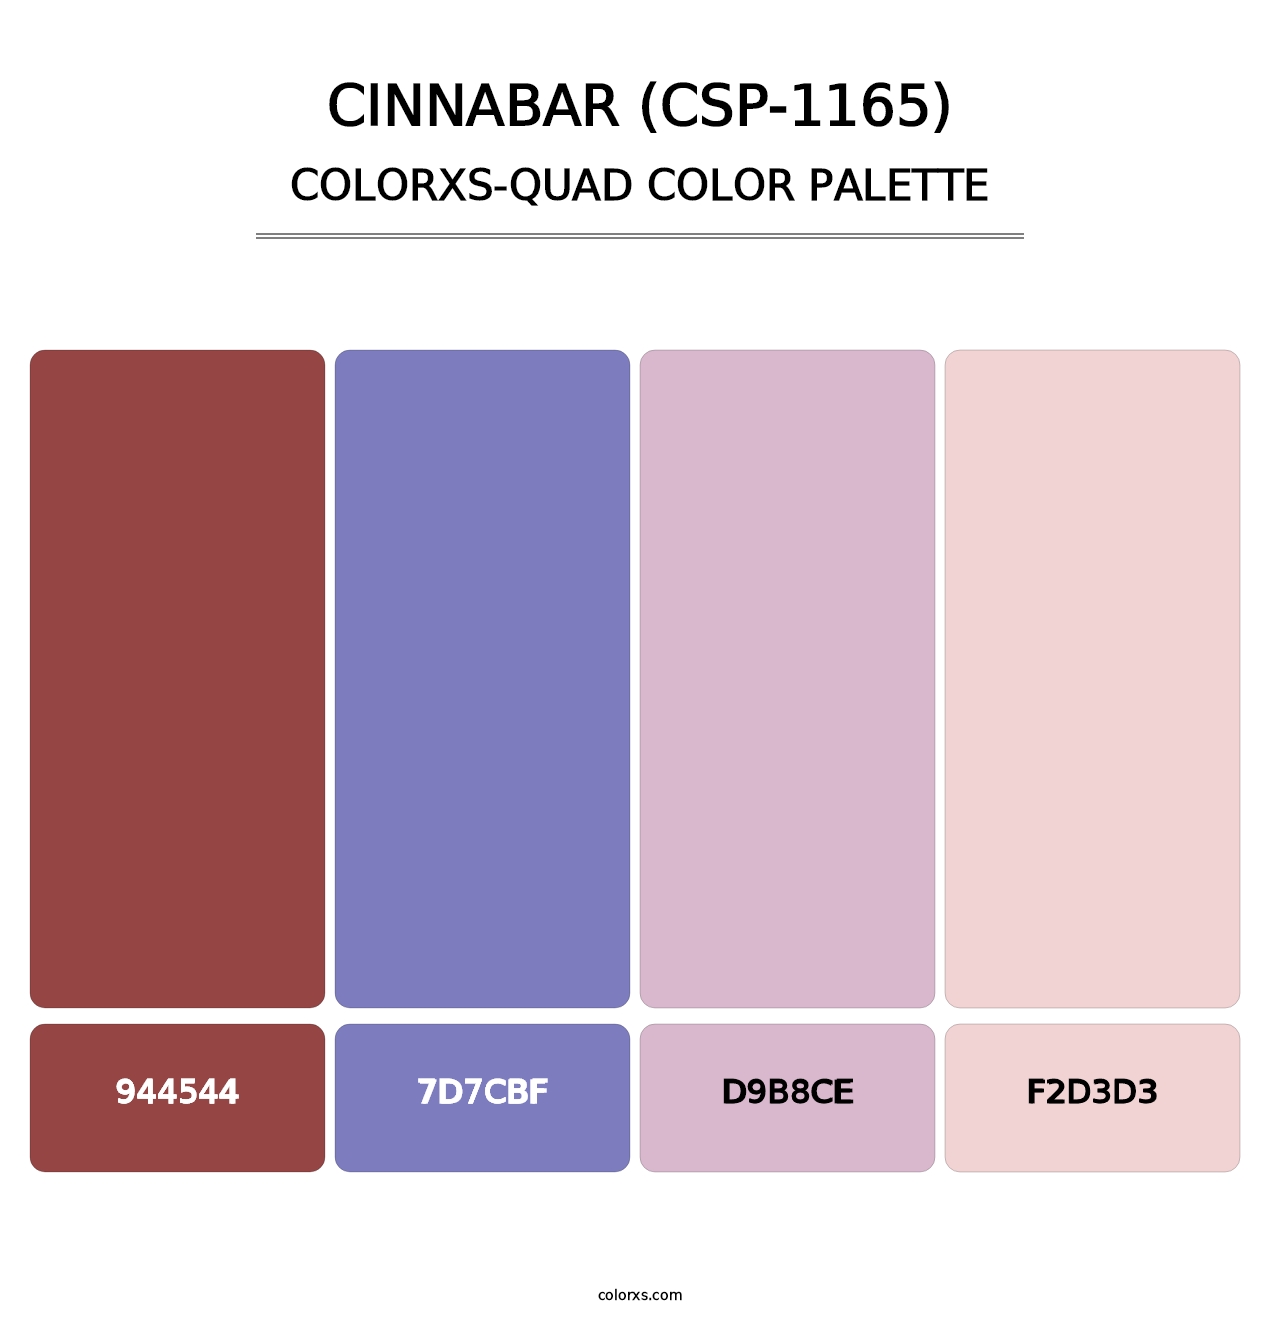 Cinnabar (CSP-1165) - Colorxs Quad Palette